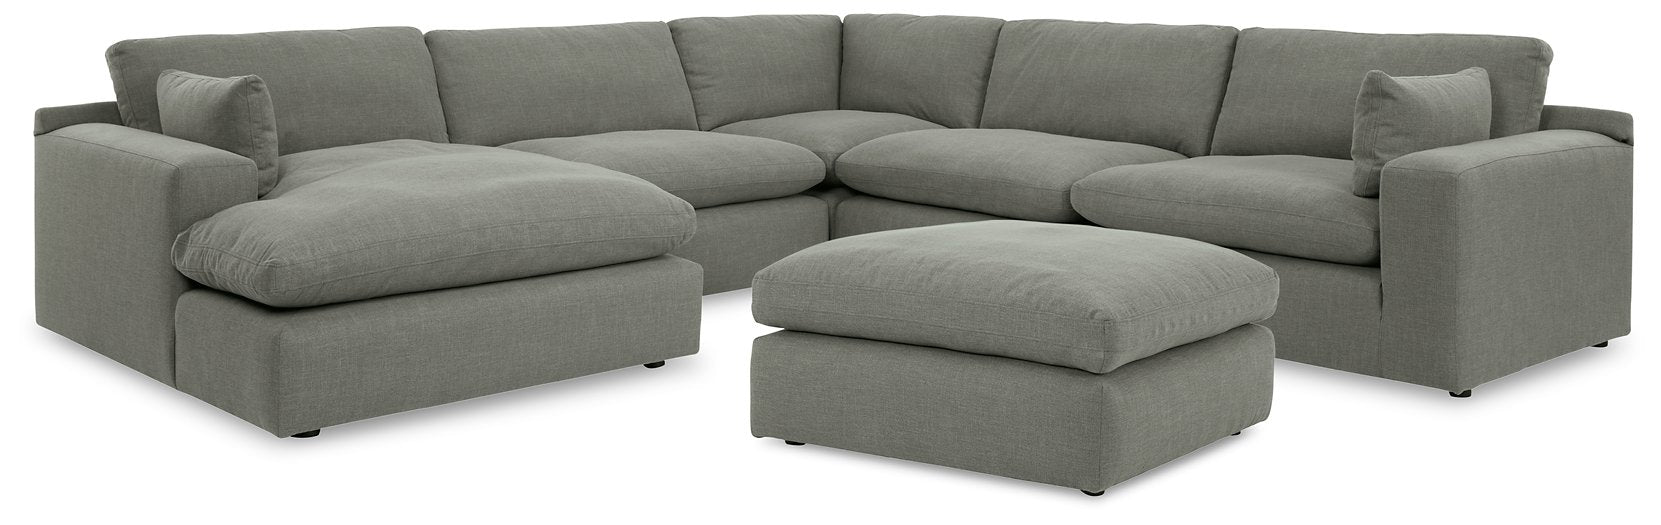 Elyza Living Room Set - Half Price Furniture